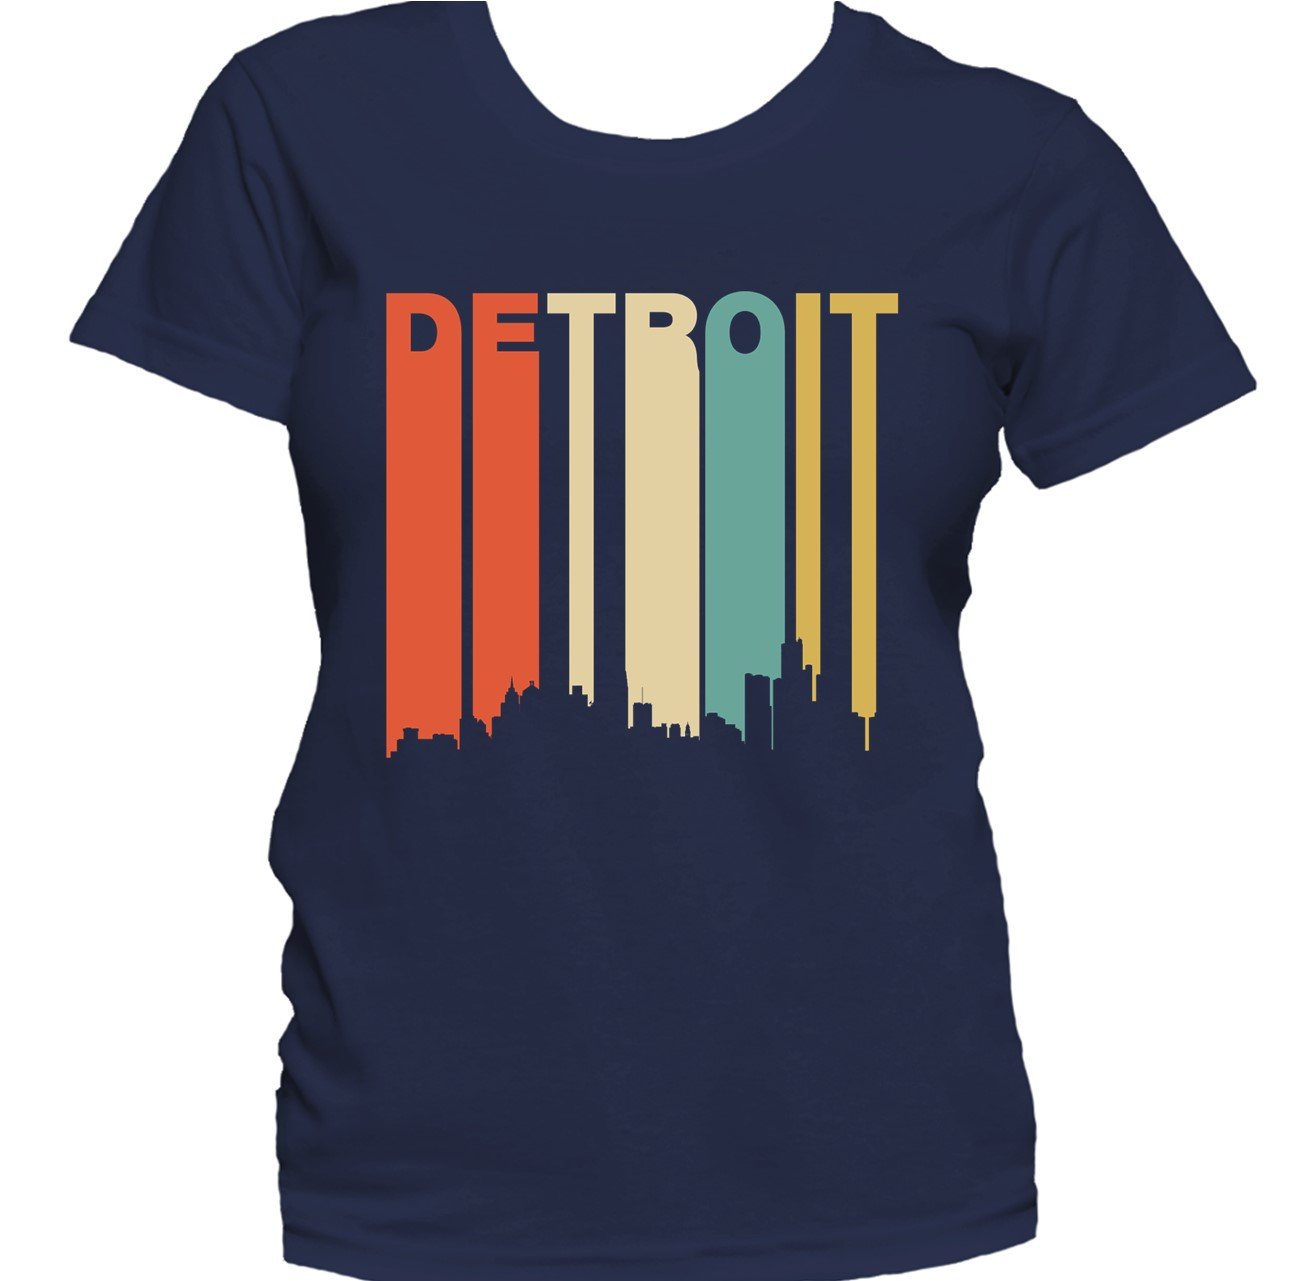 Retro 1970's Style Detroit Michigan Cityscape Downtown Skyline Women's T-Shirt